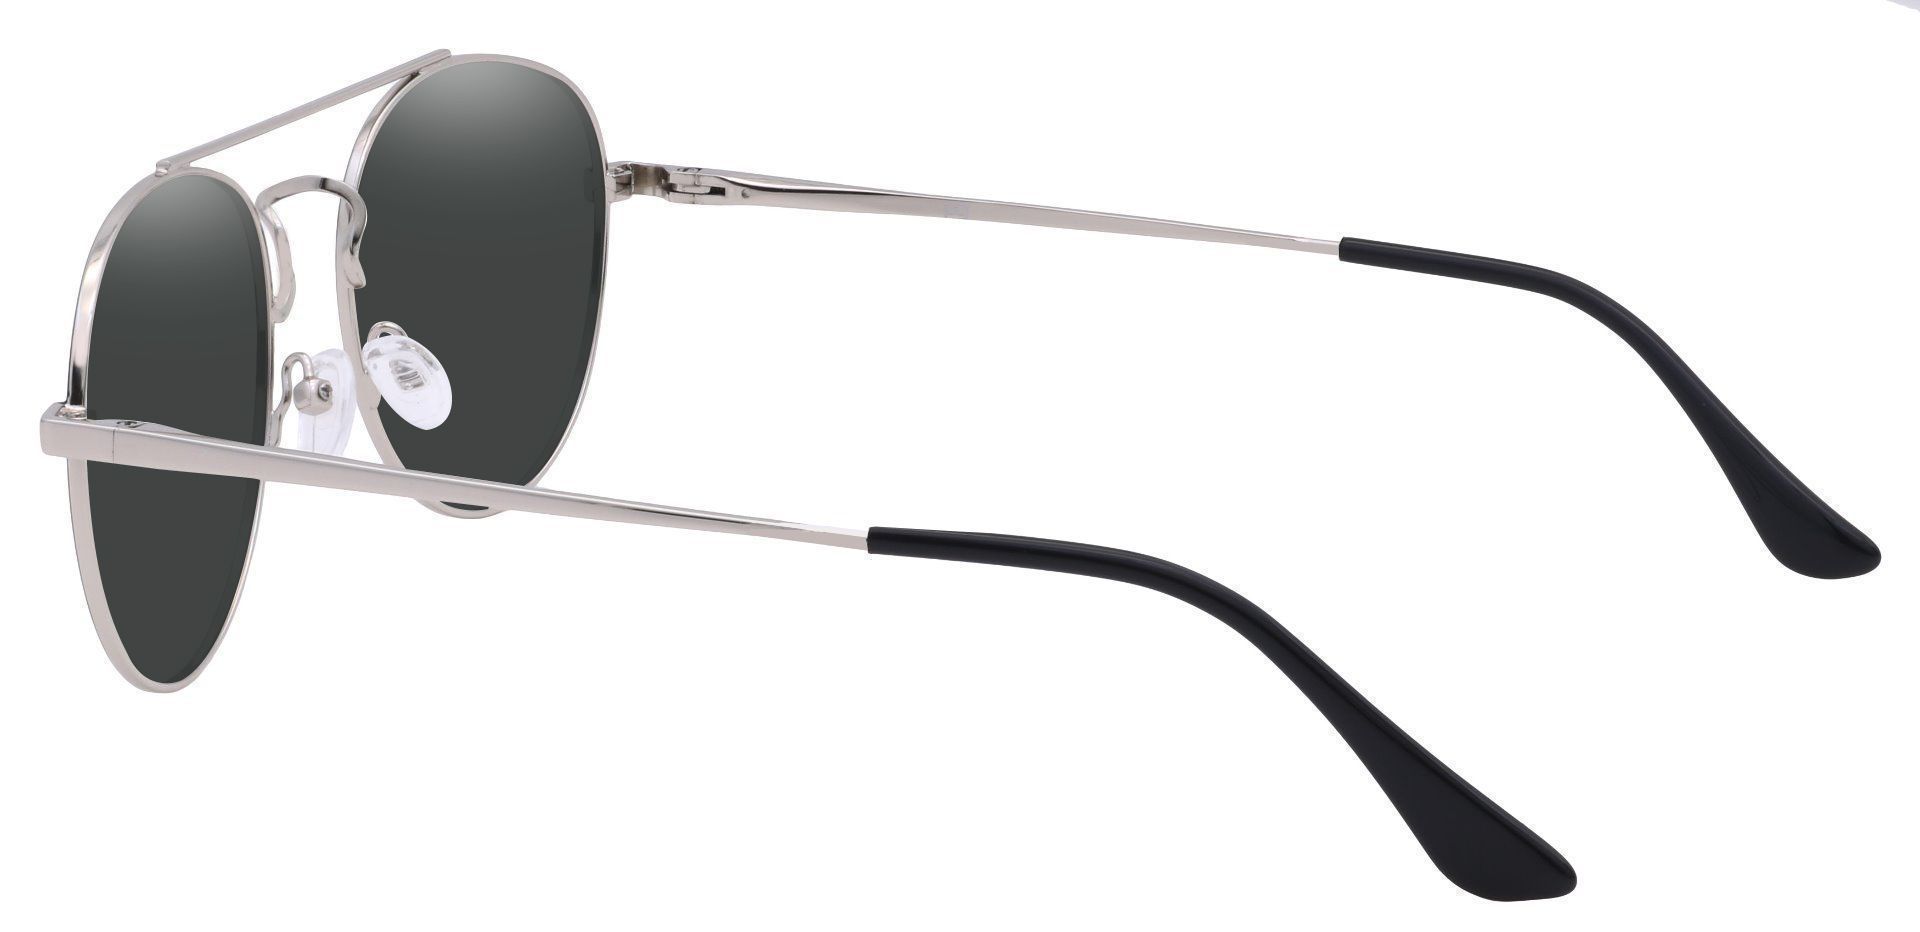 Trapp Aviator Progressive Sunglasses - Gray Frame With Gray Lenses